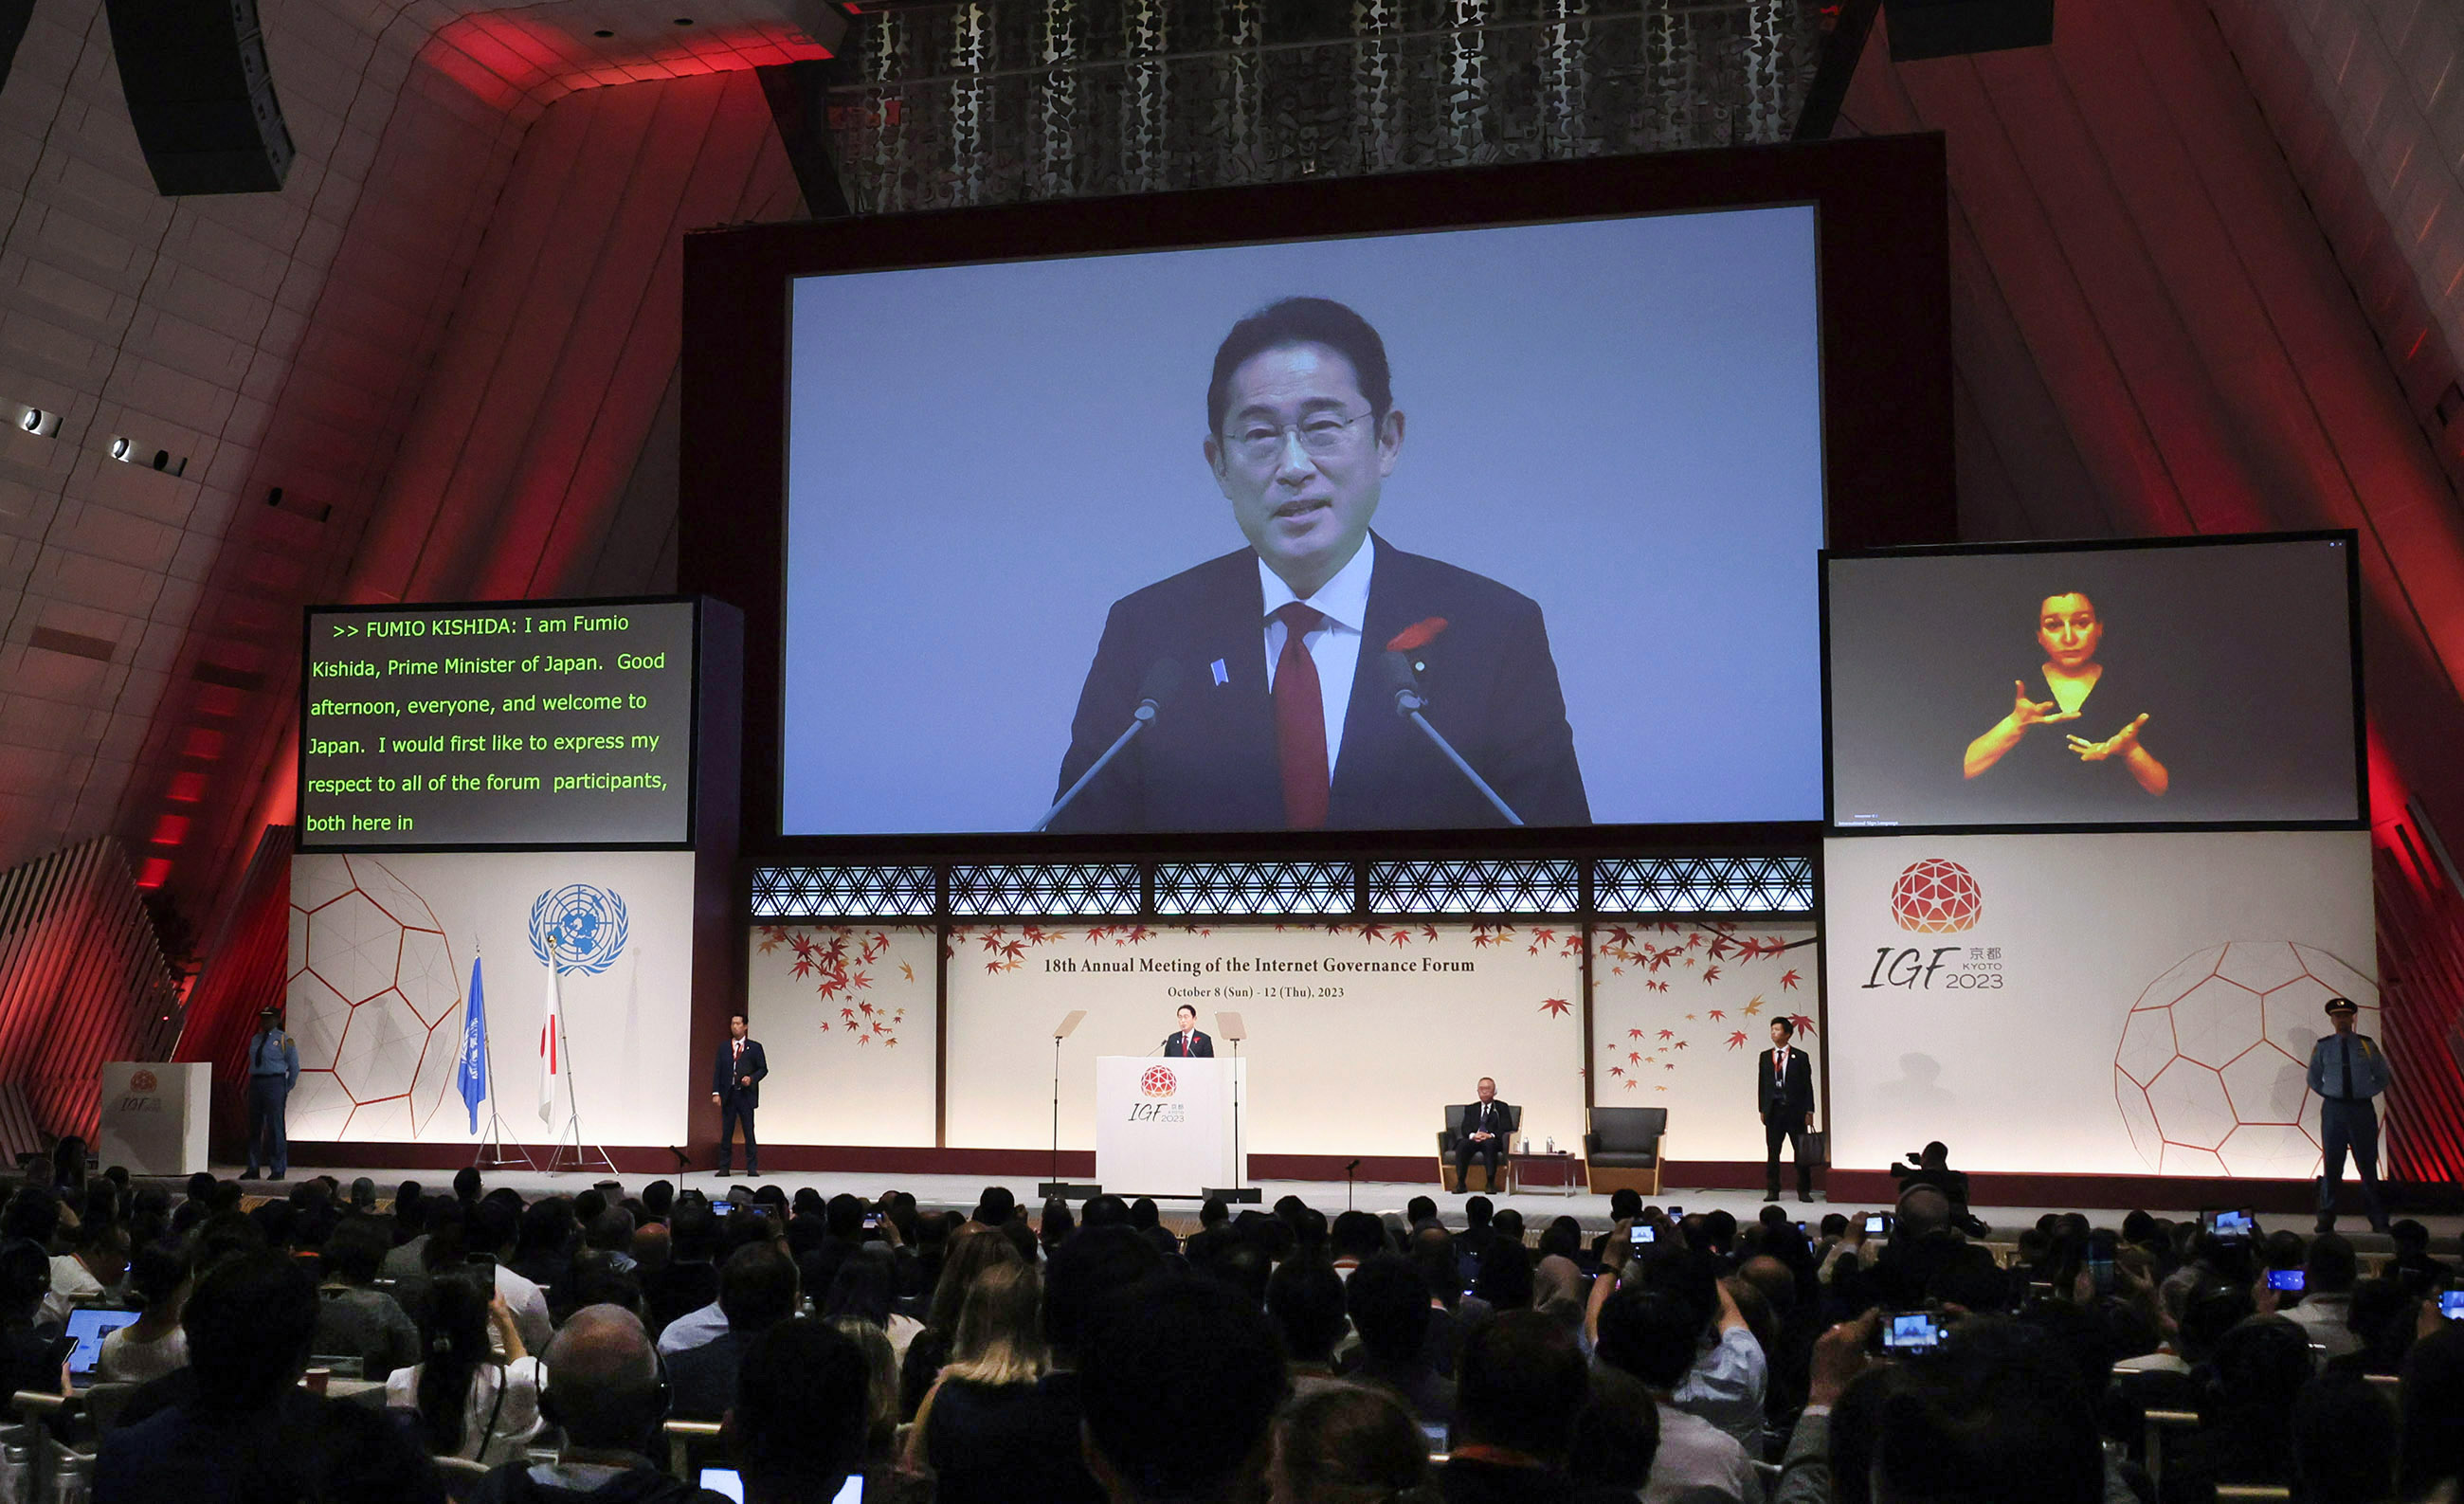 Prime Minister Kishida attending the opening ceremony (1)